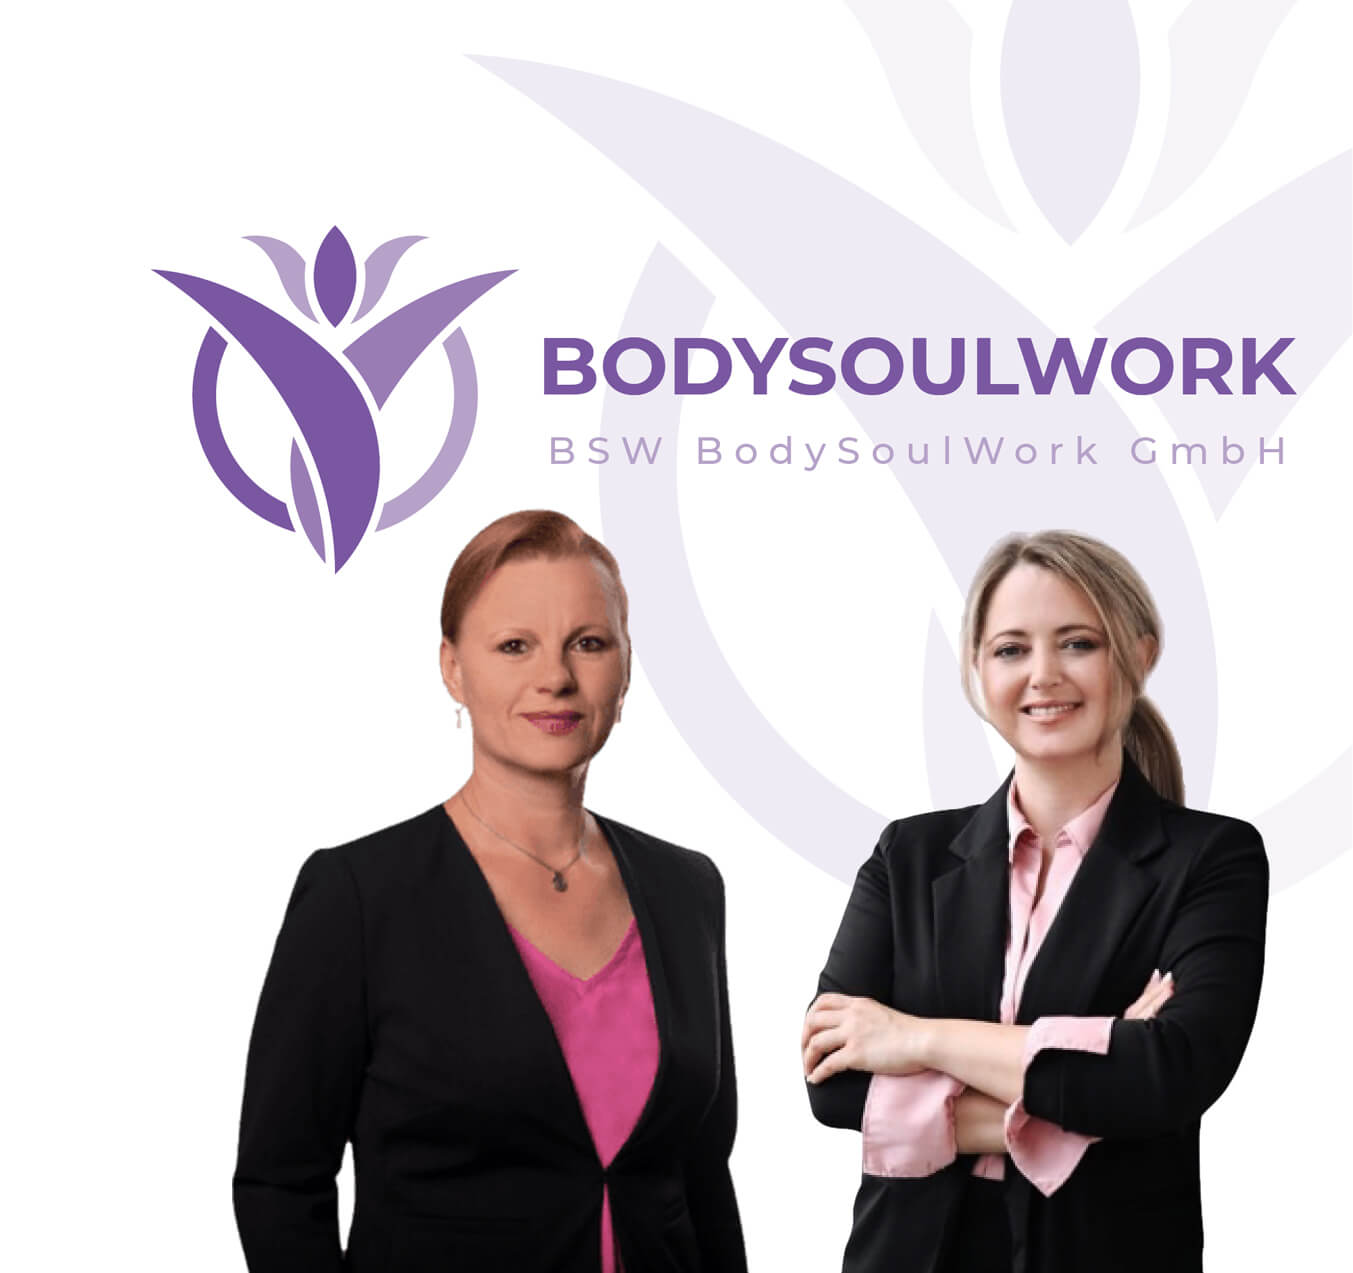 BSW-BodySoulWork-GmbH-Expertinnen